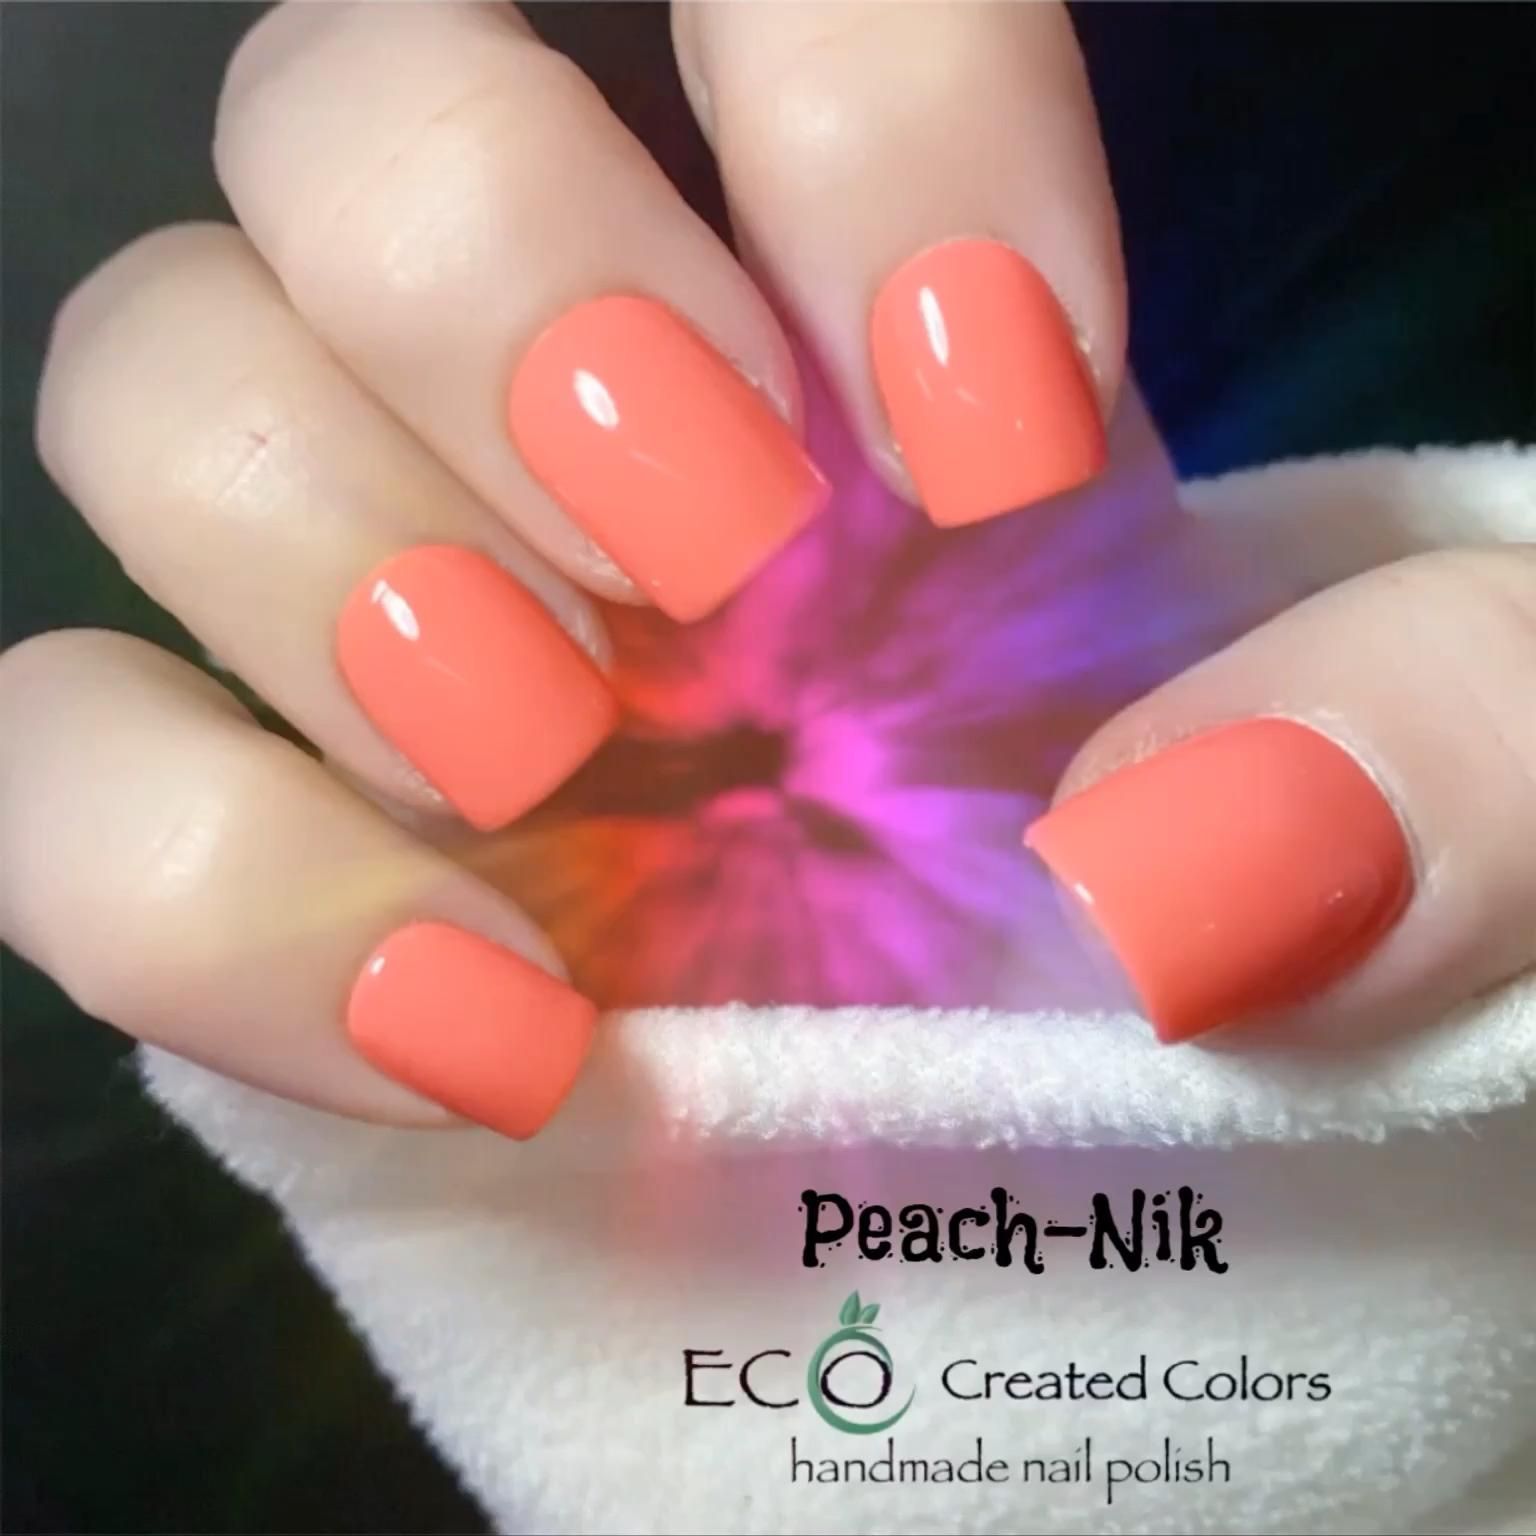 Peach-Nik  Coral/Orange/Pink Nail Polish 10 Free Polish | Etsy - Peach-Nik  Coral/Orange/Pink Nail Polish 10 Free Polish | Etsy -   14 beauty nails ideas